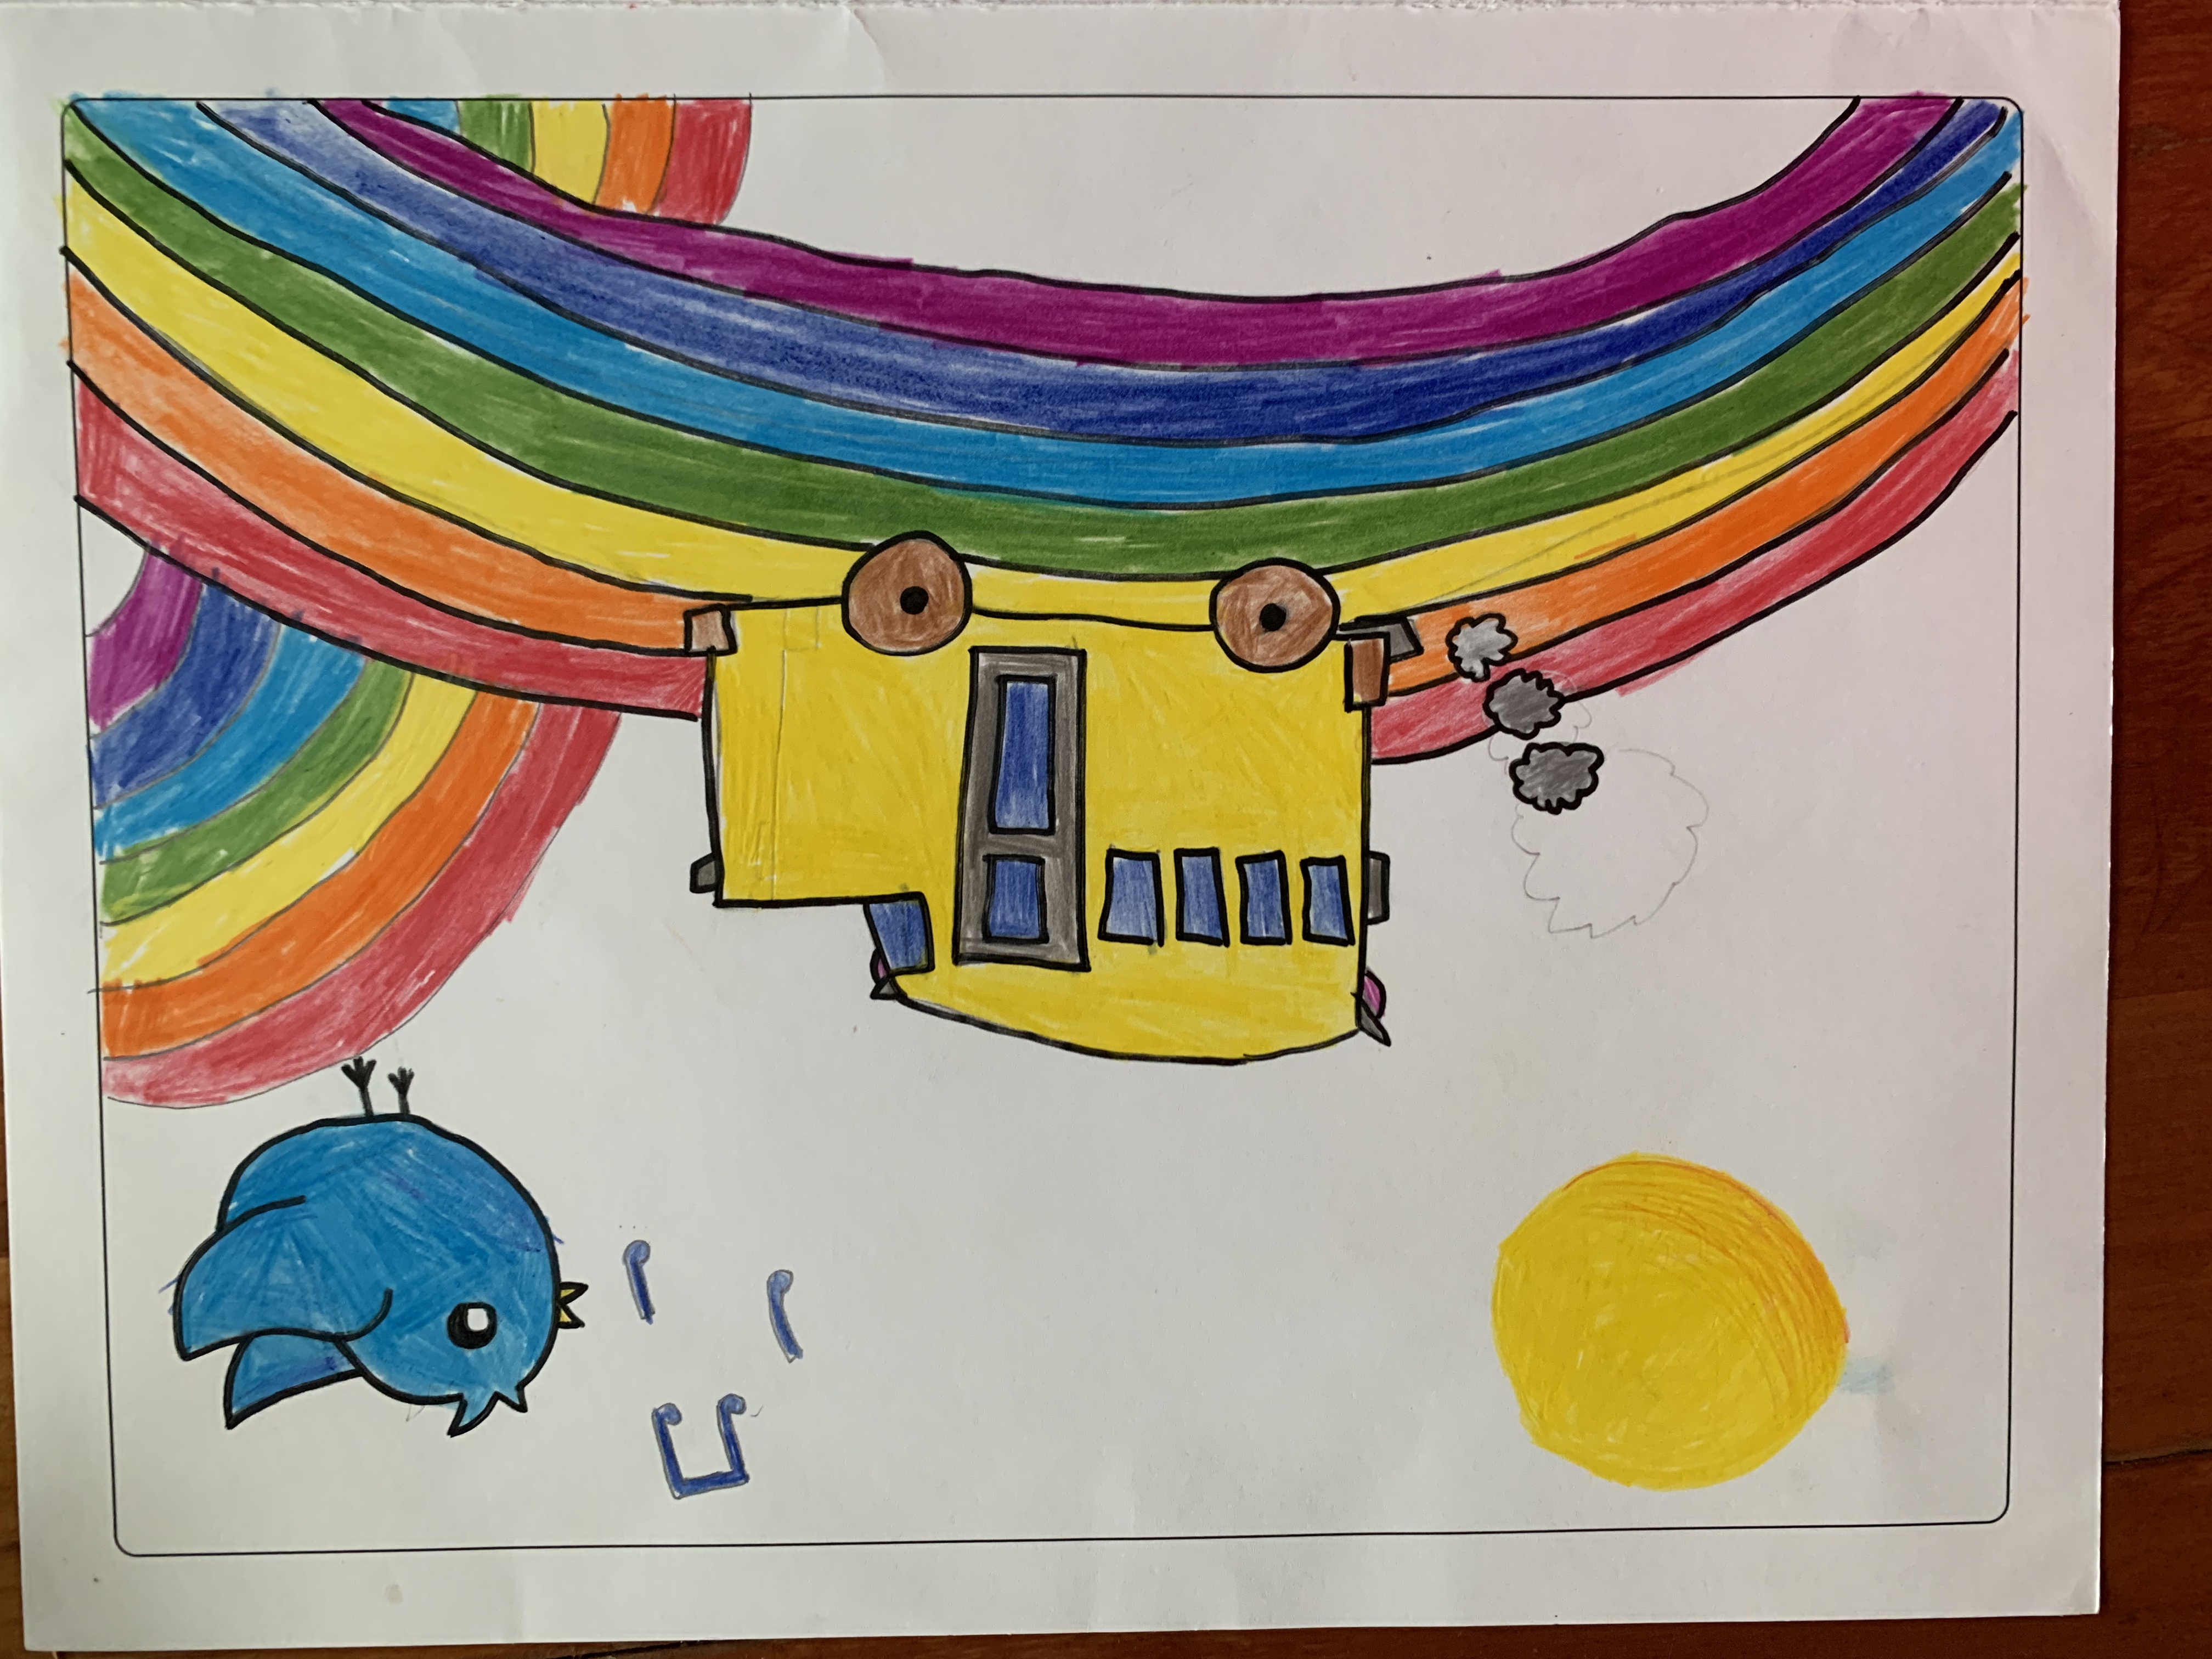 School bus and bird on rainbows